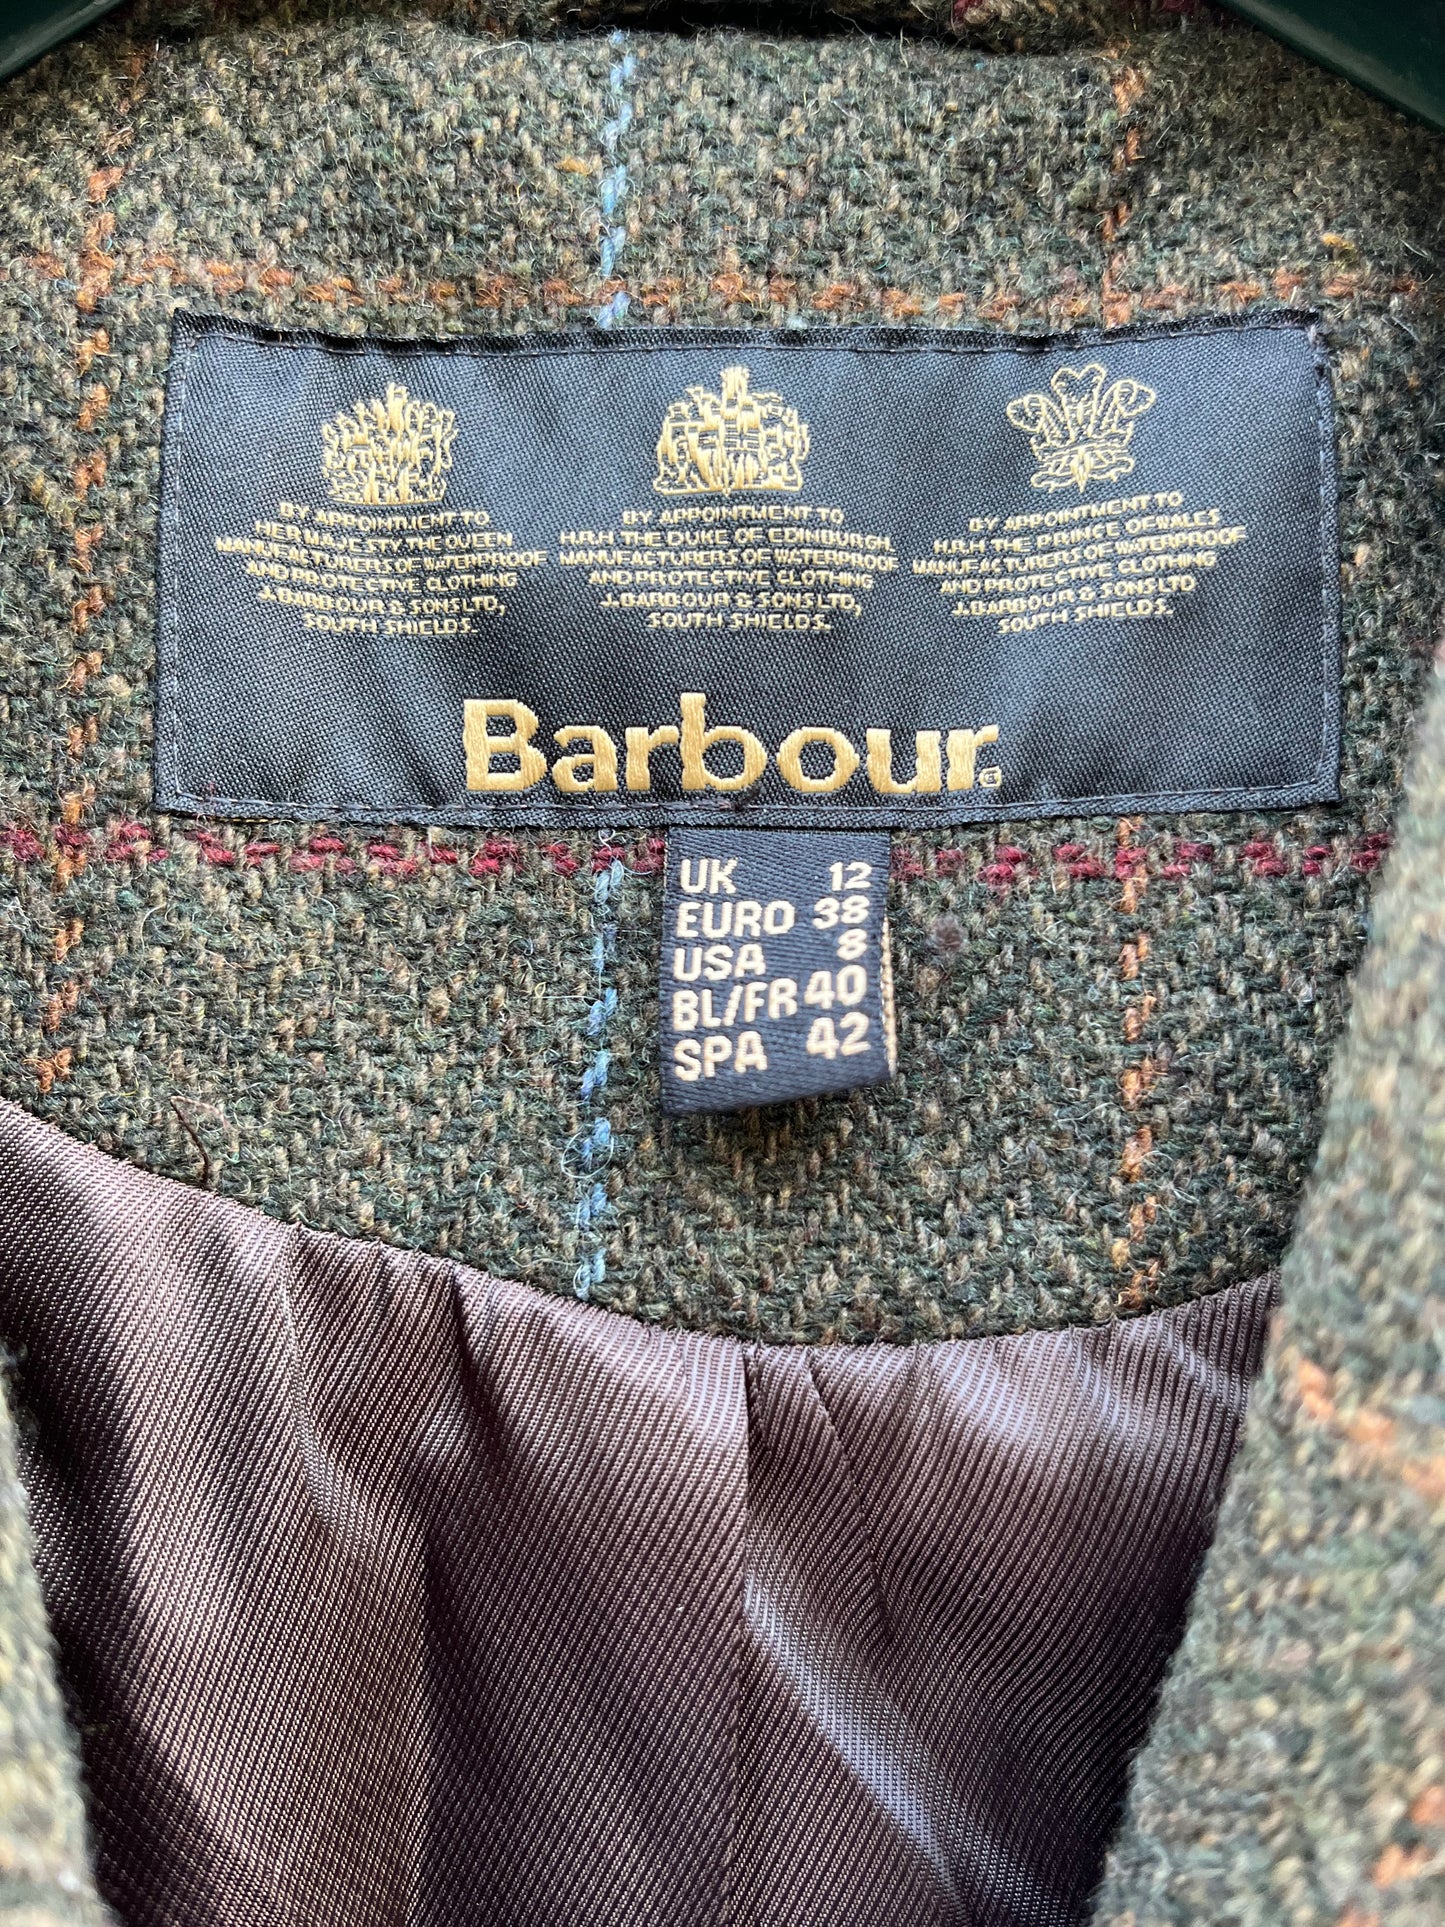 Giacca Barbour Donna verde Tweed Uk12 Medium Tweed Lady Jacket Size UK12